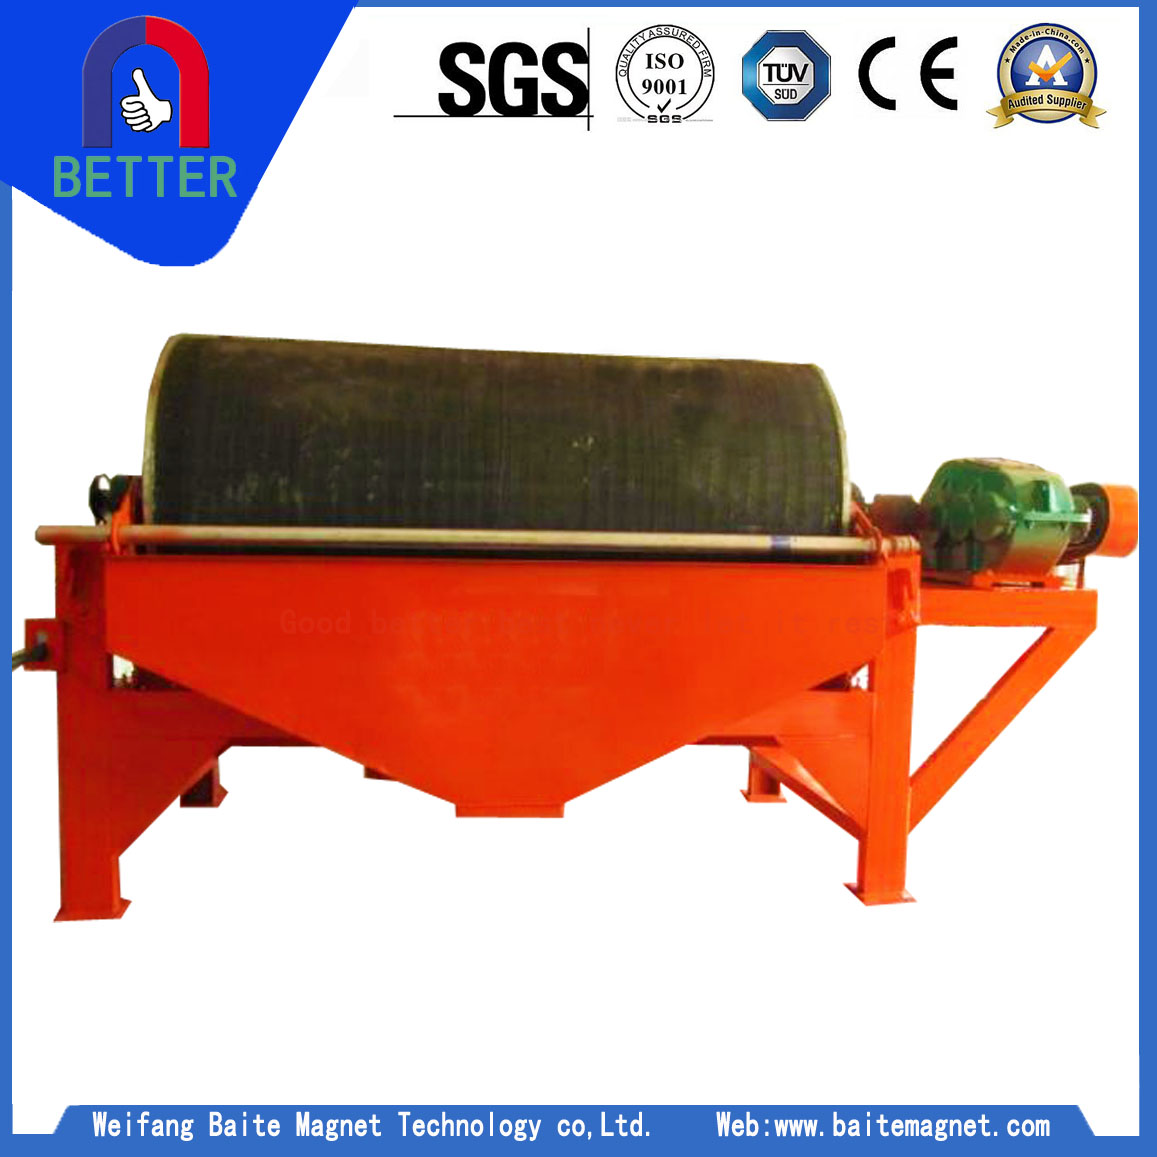   Introduction for Steel slag magnetic separator 